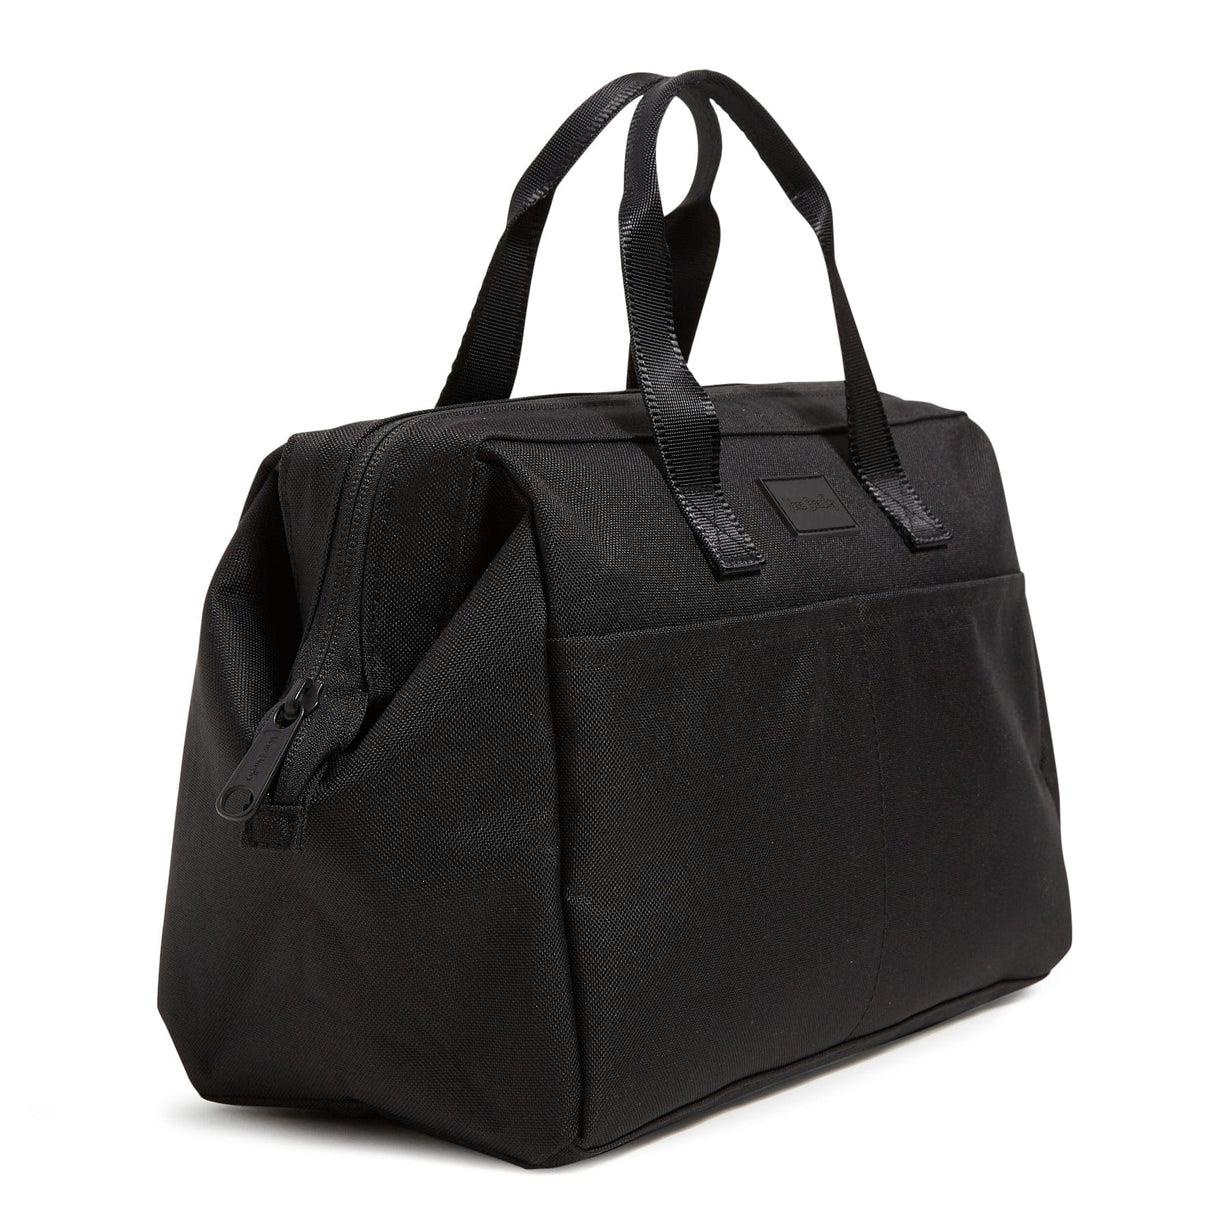 Wrapables Unisex Bag Insert Organizer, Travel Bag Organizer